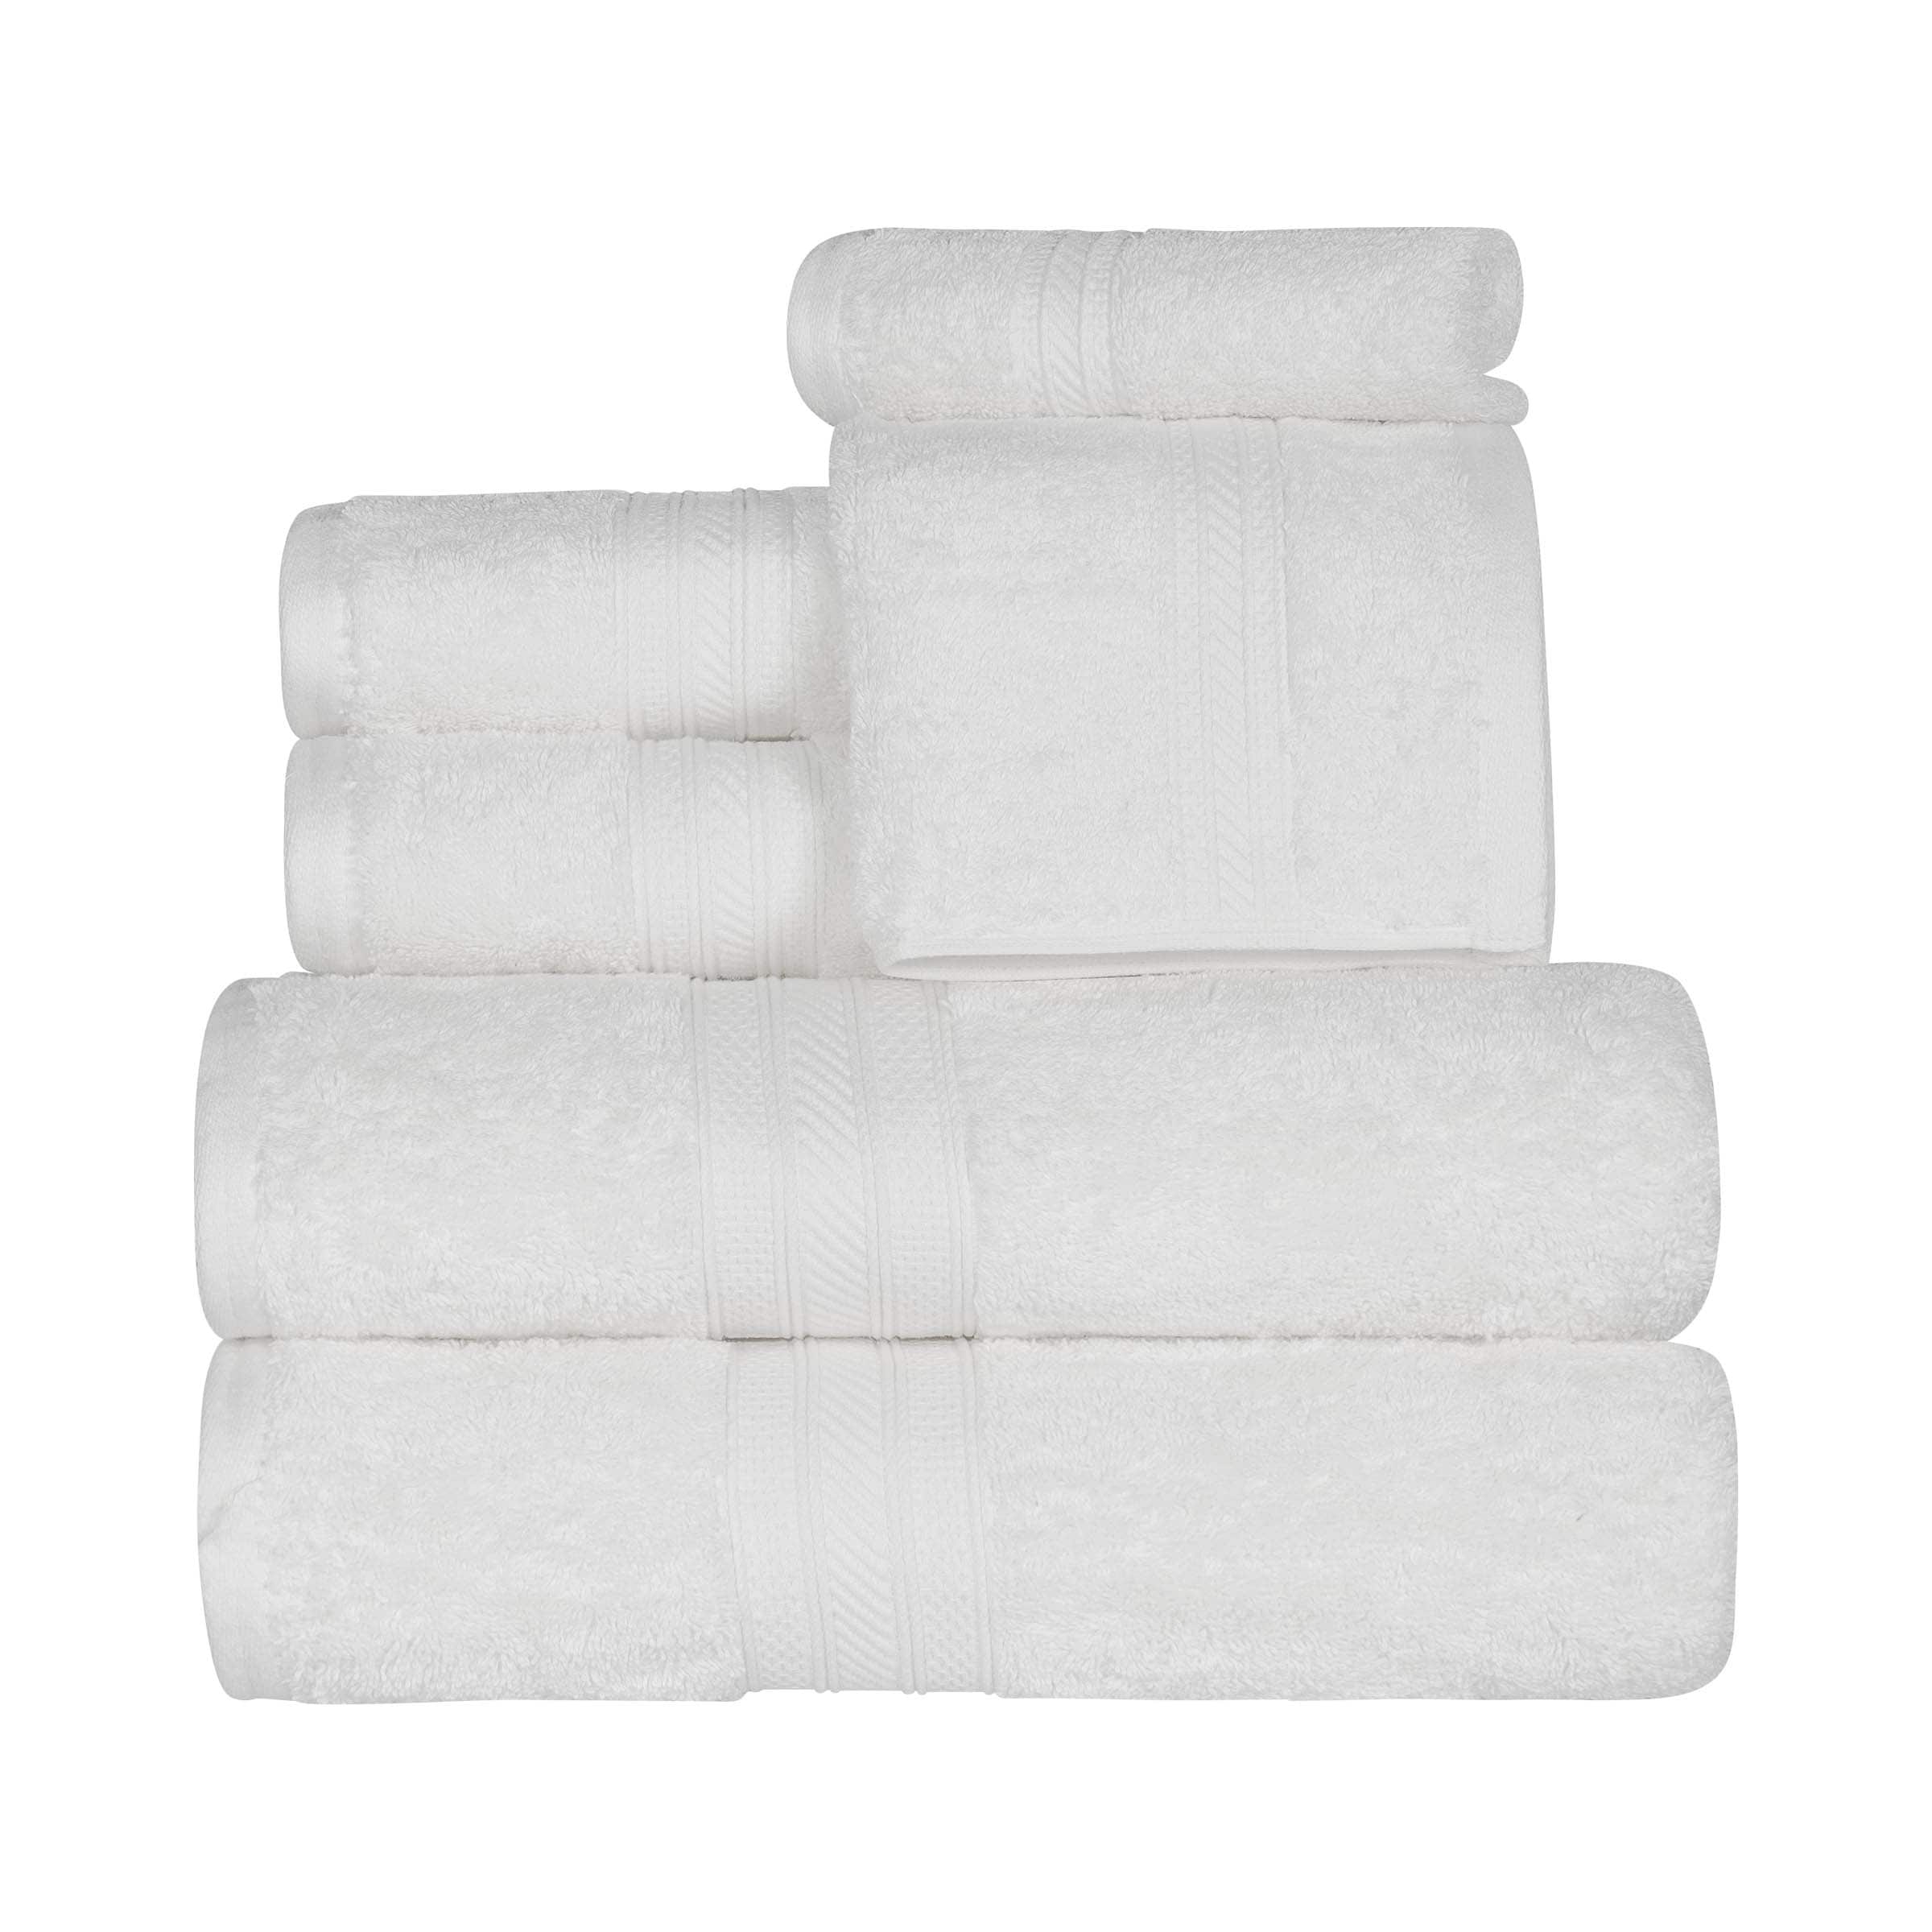 SUPERIOR Zero Twist 100% Cotton Bath Towels, Super Soft, Fluffy and  Absorbent, Premium Quality Oversized Bath Towel Set of 2, Brick